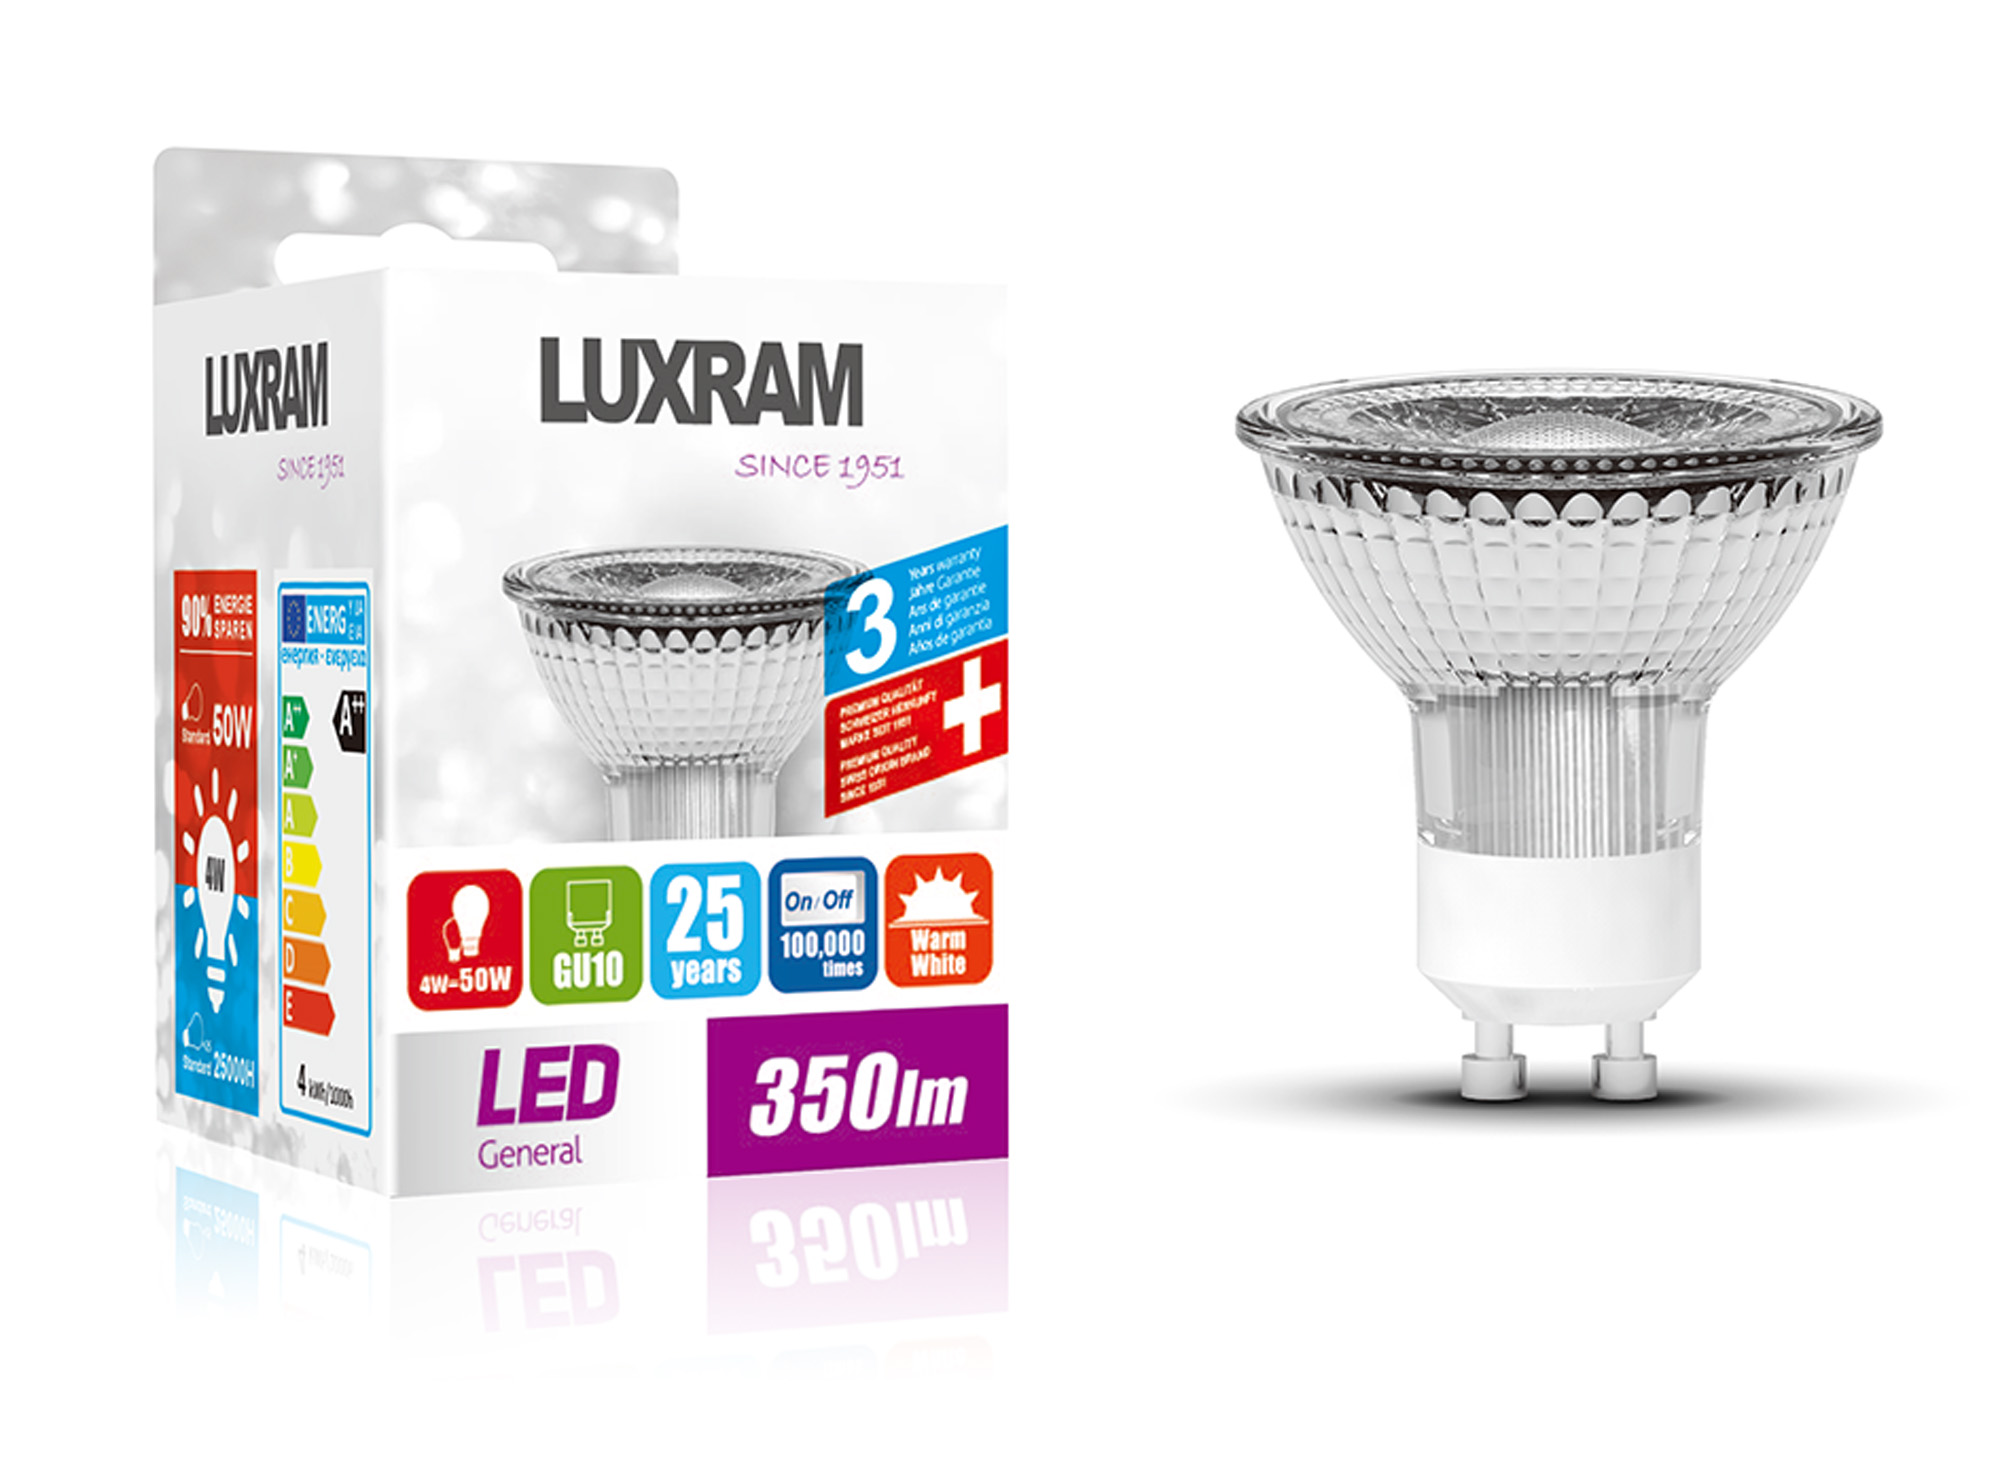 HaloLED LED Lamps Luxram Spot Lamps